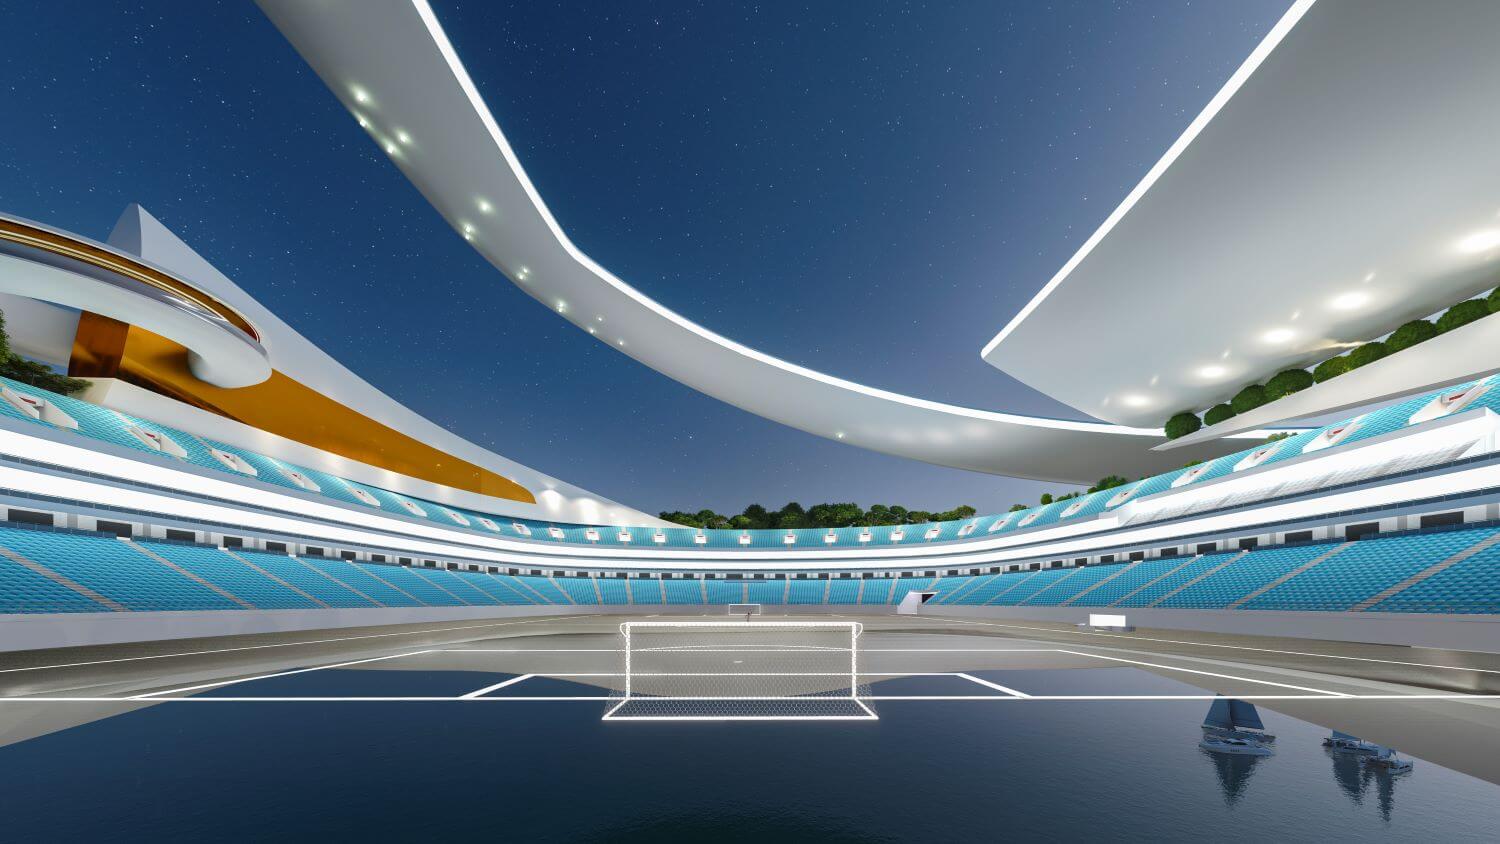 Estádio futurista metaverso interior arena esportiva de alta tecnologia